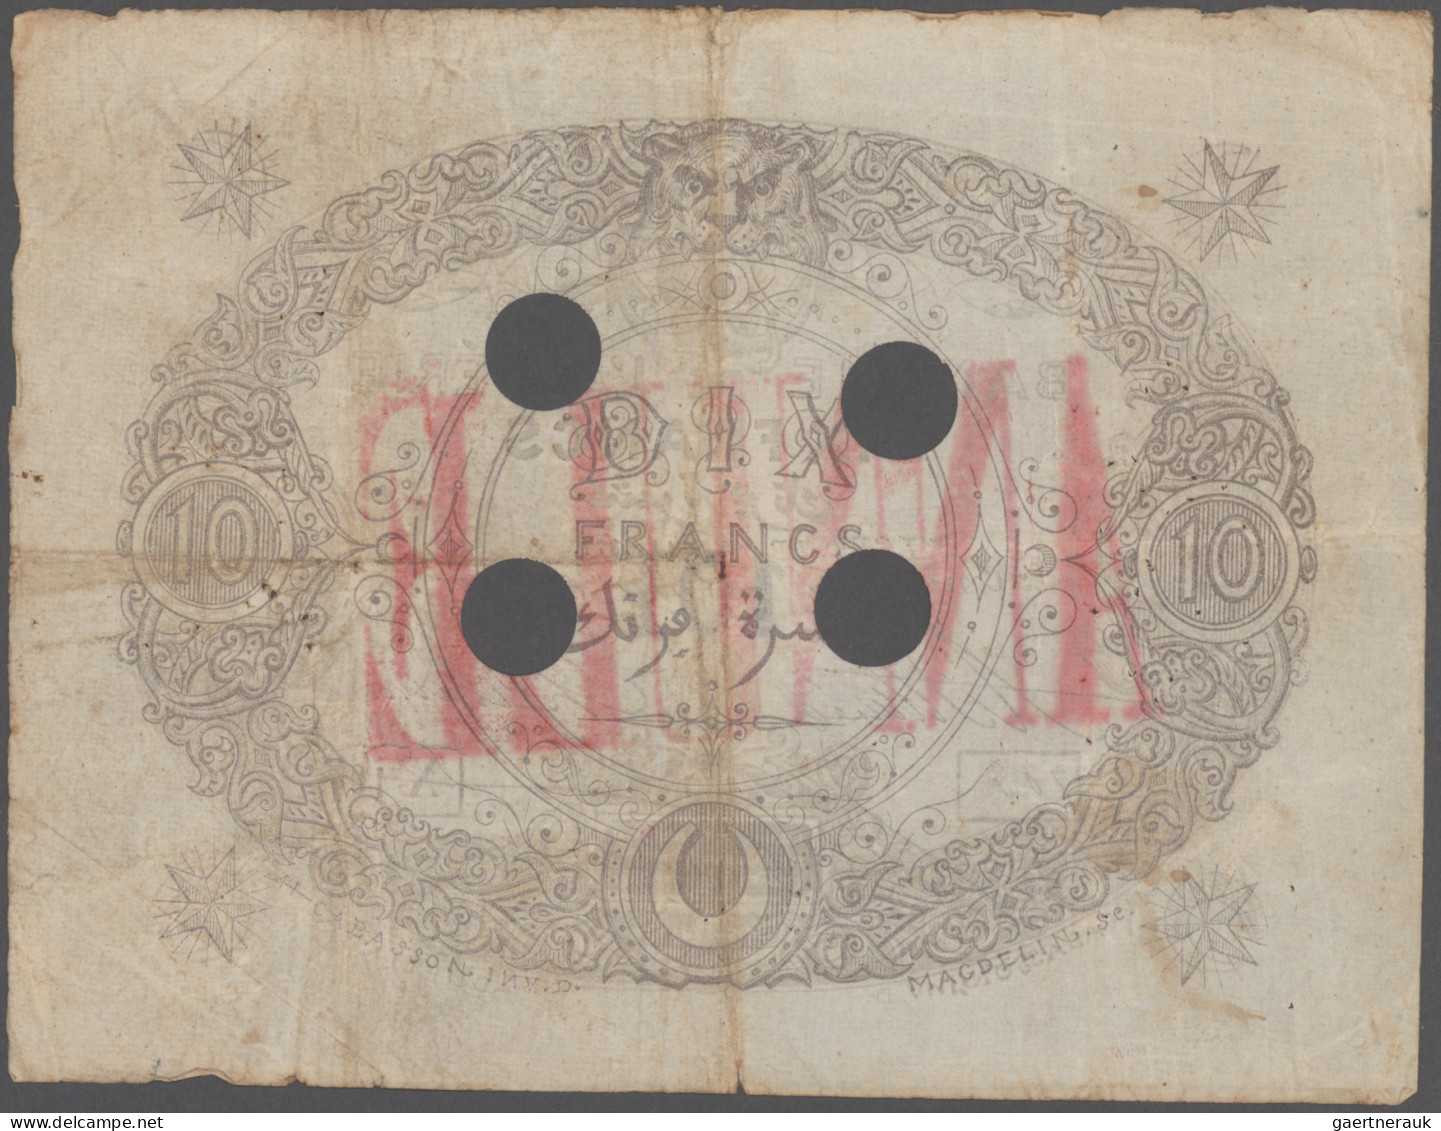 Algeria: Banque De L'Algérie, 10 Francs 15.5.1871, P.14, Cancelled With Overprin - Algeria